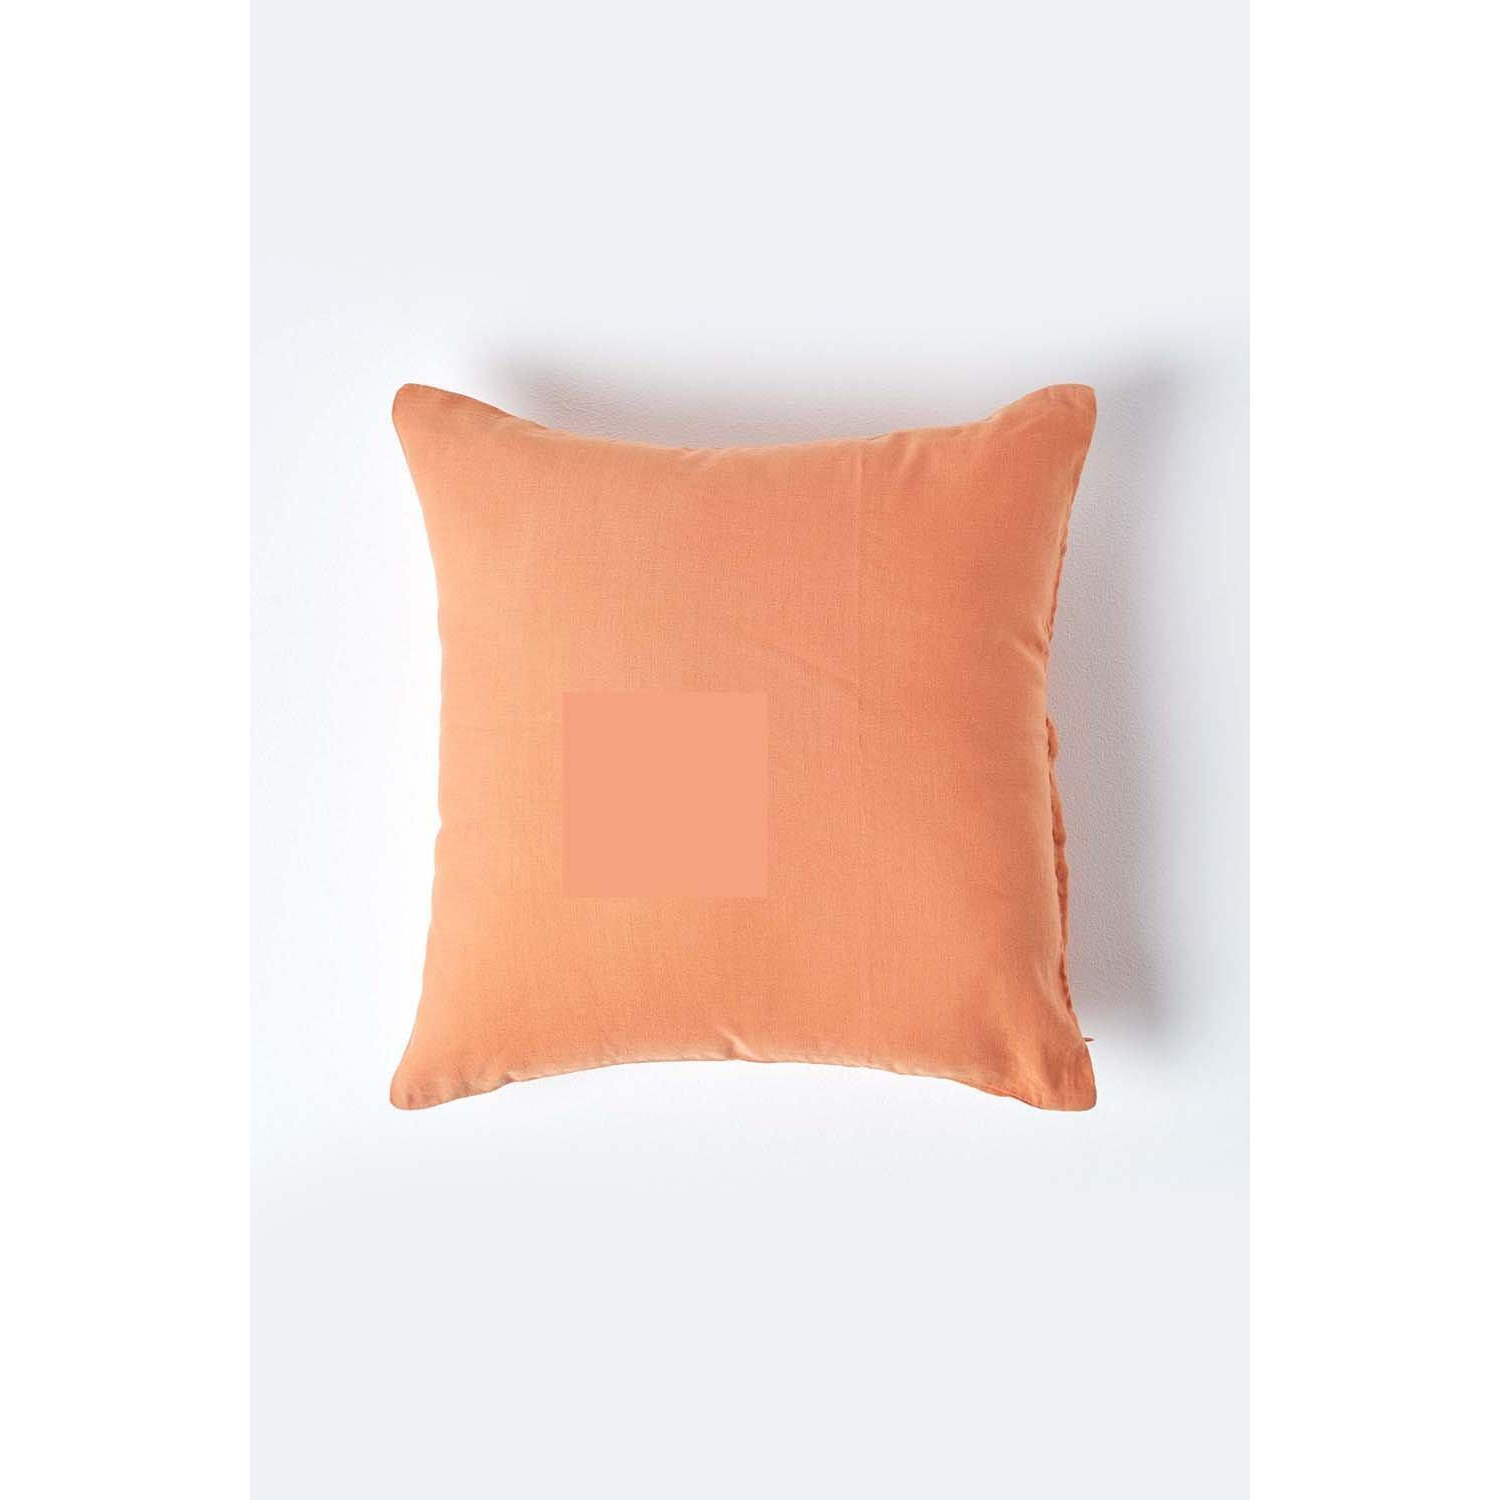 European Linen Pillowcase, 80 x 80 cm - image 1